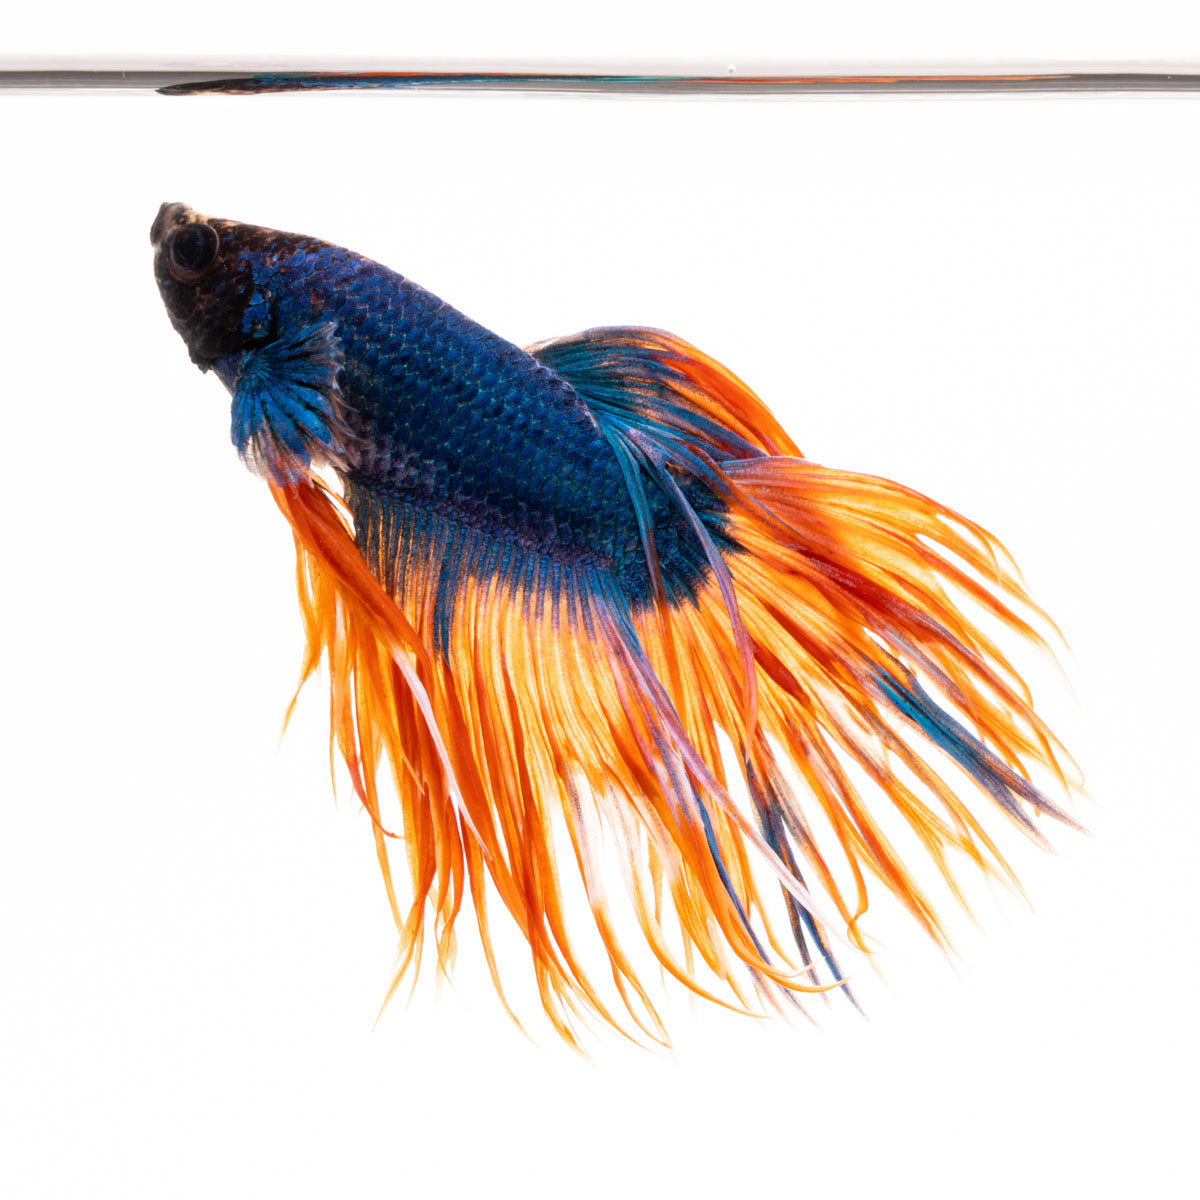 Live Betta Fish for Sale - Siamese Fighting Fish for Tropical Aquarium –  Glass Aqua